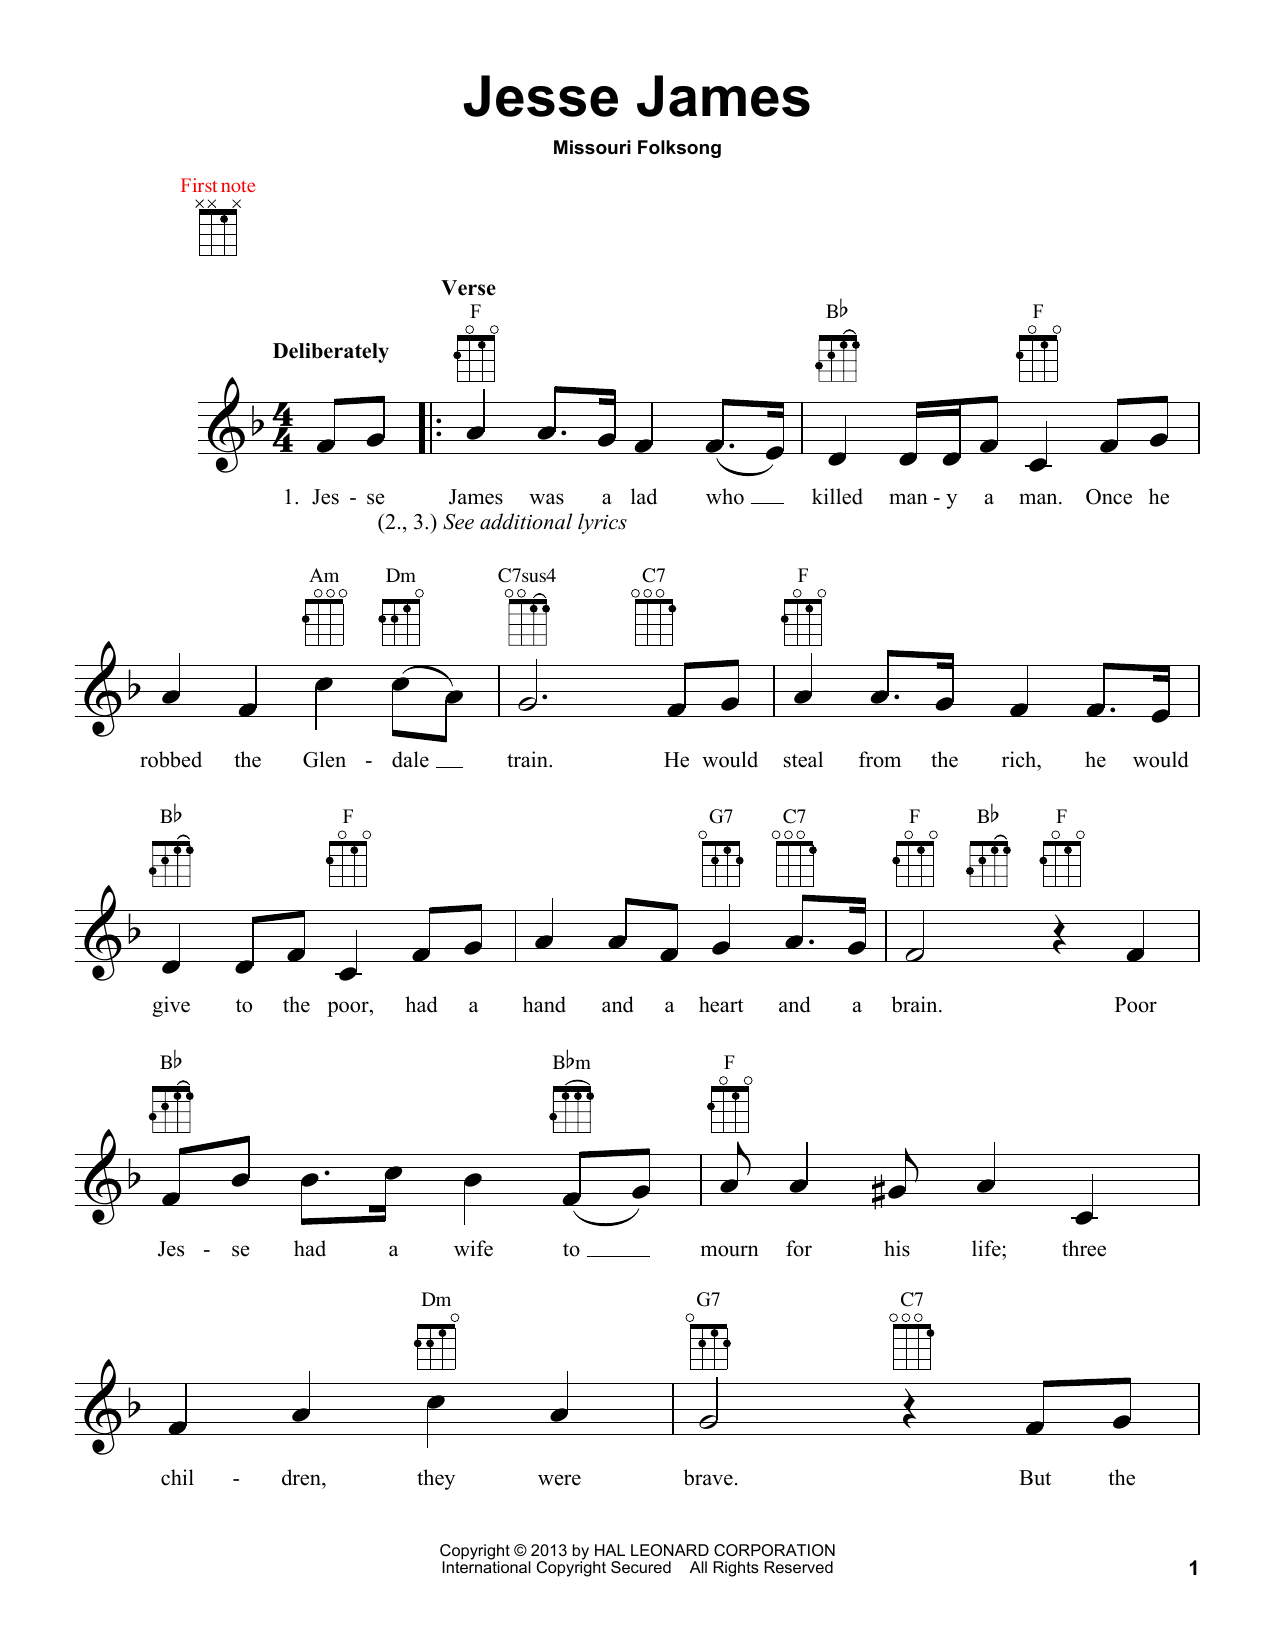 Missouri Folksong Jesse James Sheet Music Notes & Chords for Ukulele - Download or Print PDF